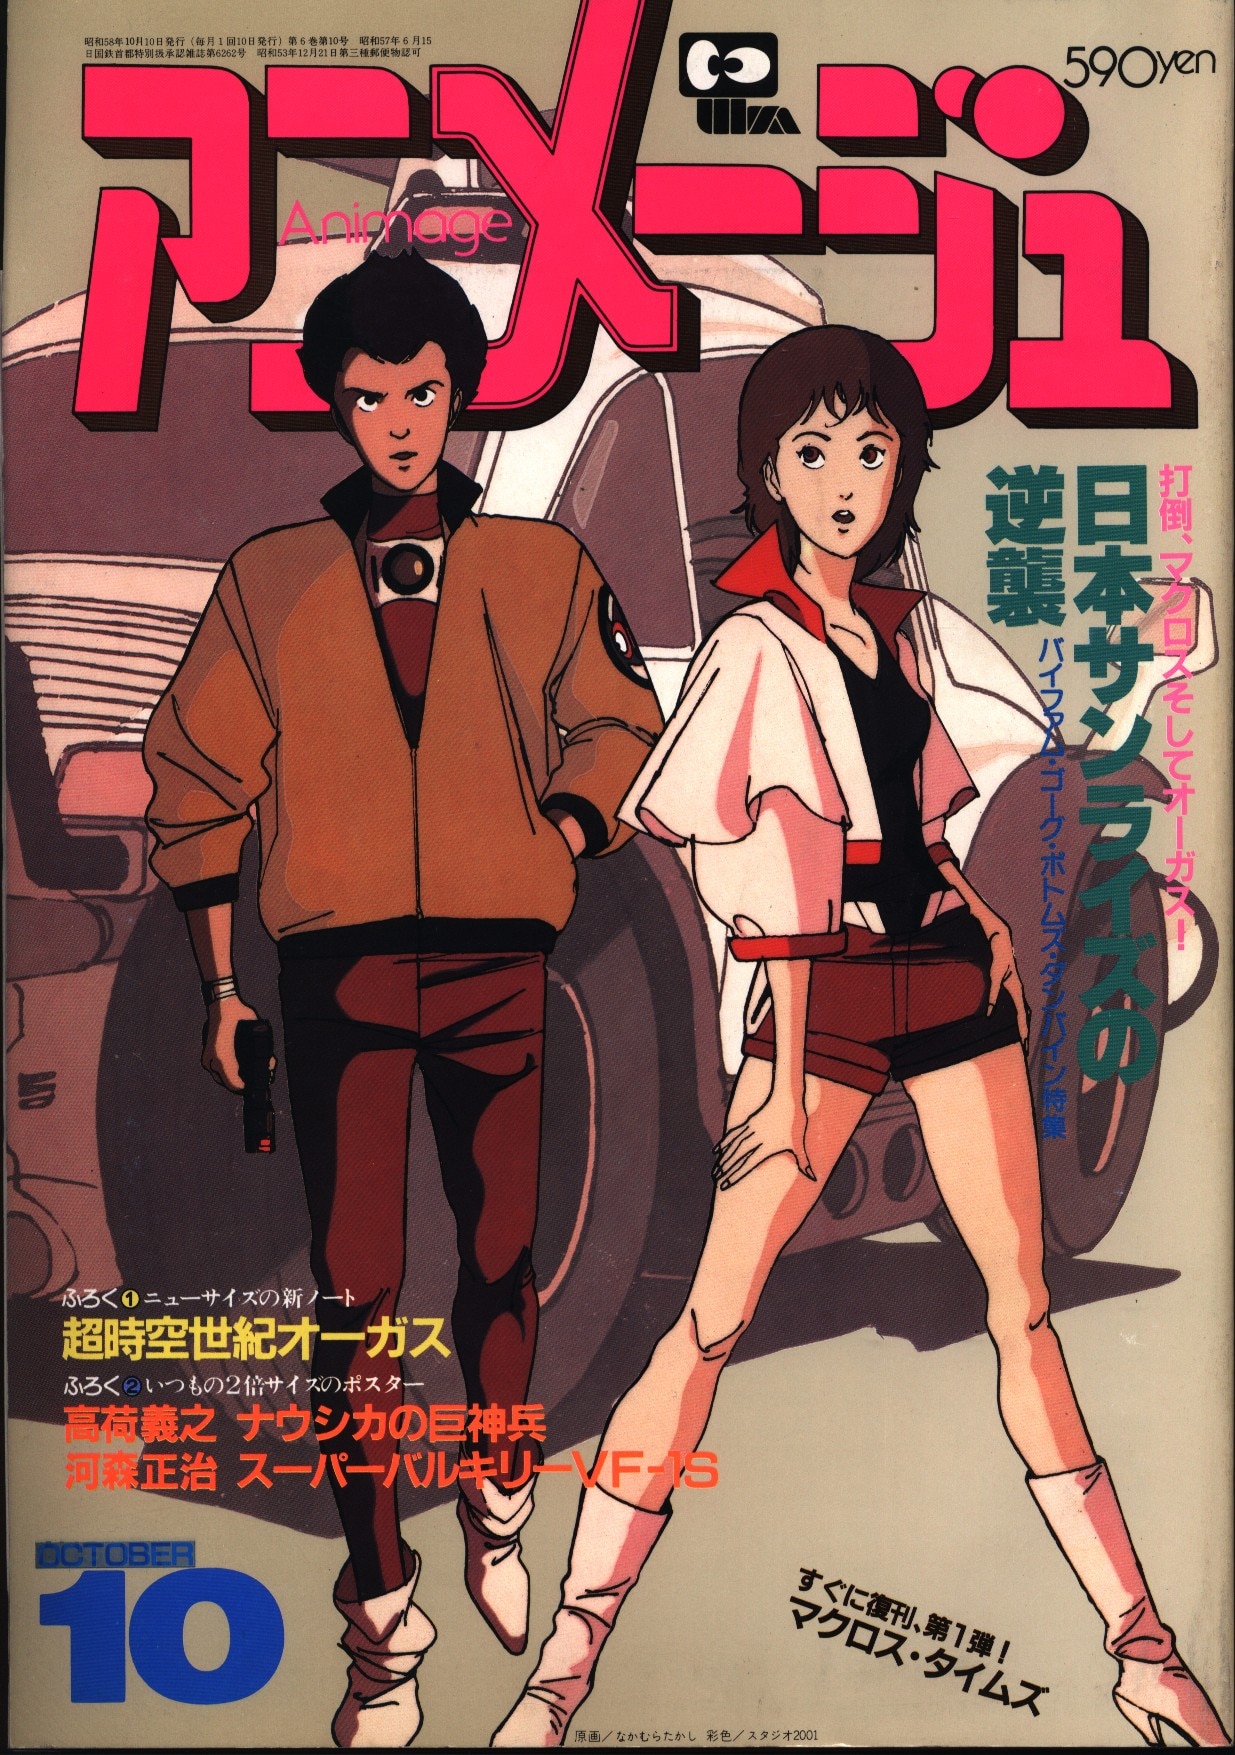 MACROSS Super Dimension Fortress BOOK Set of 4 Anime HARUHIKO MIKIMOTO 1983-84  - SIPRO-CHIM